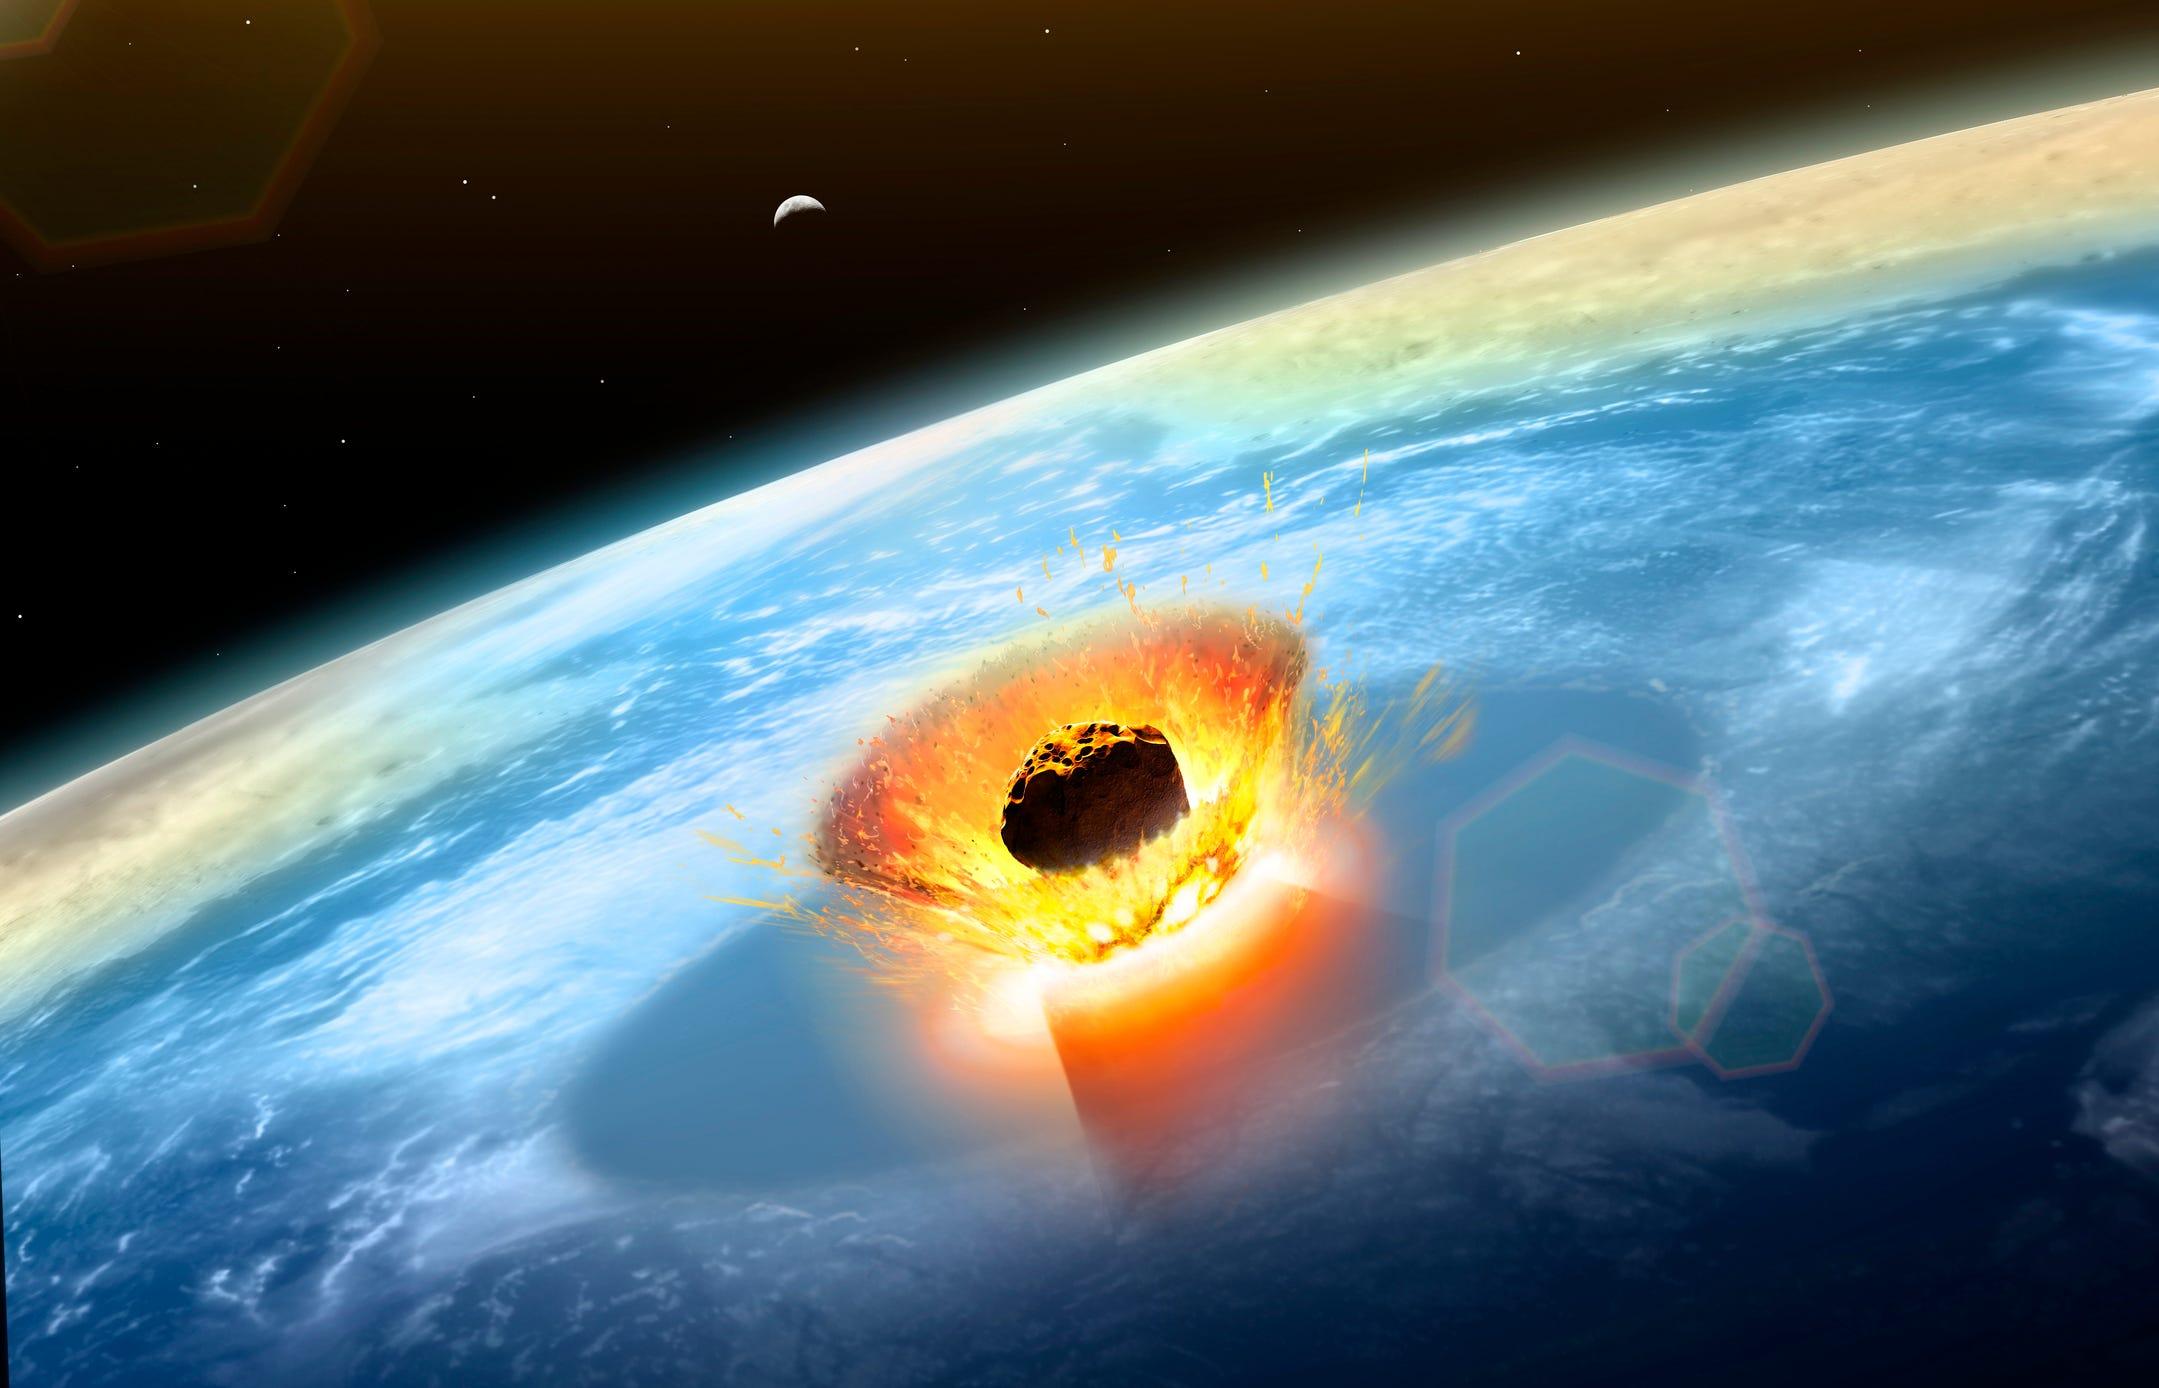 NASAは小惑星の衝突が迫った場合に警告する手順を決めている